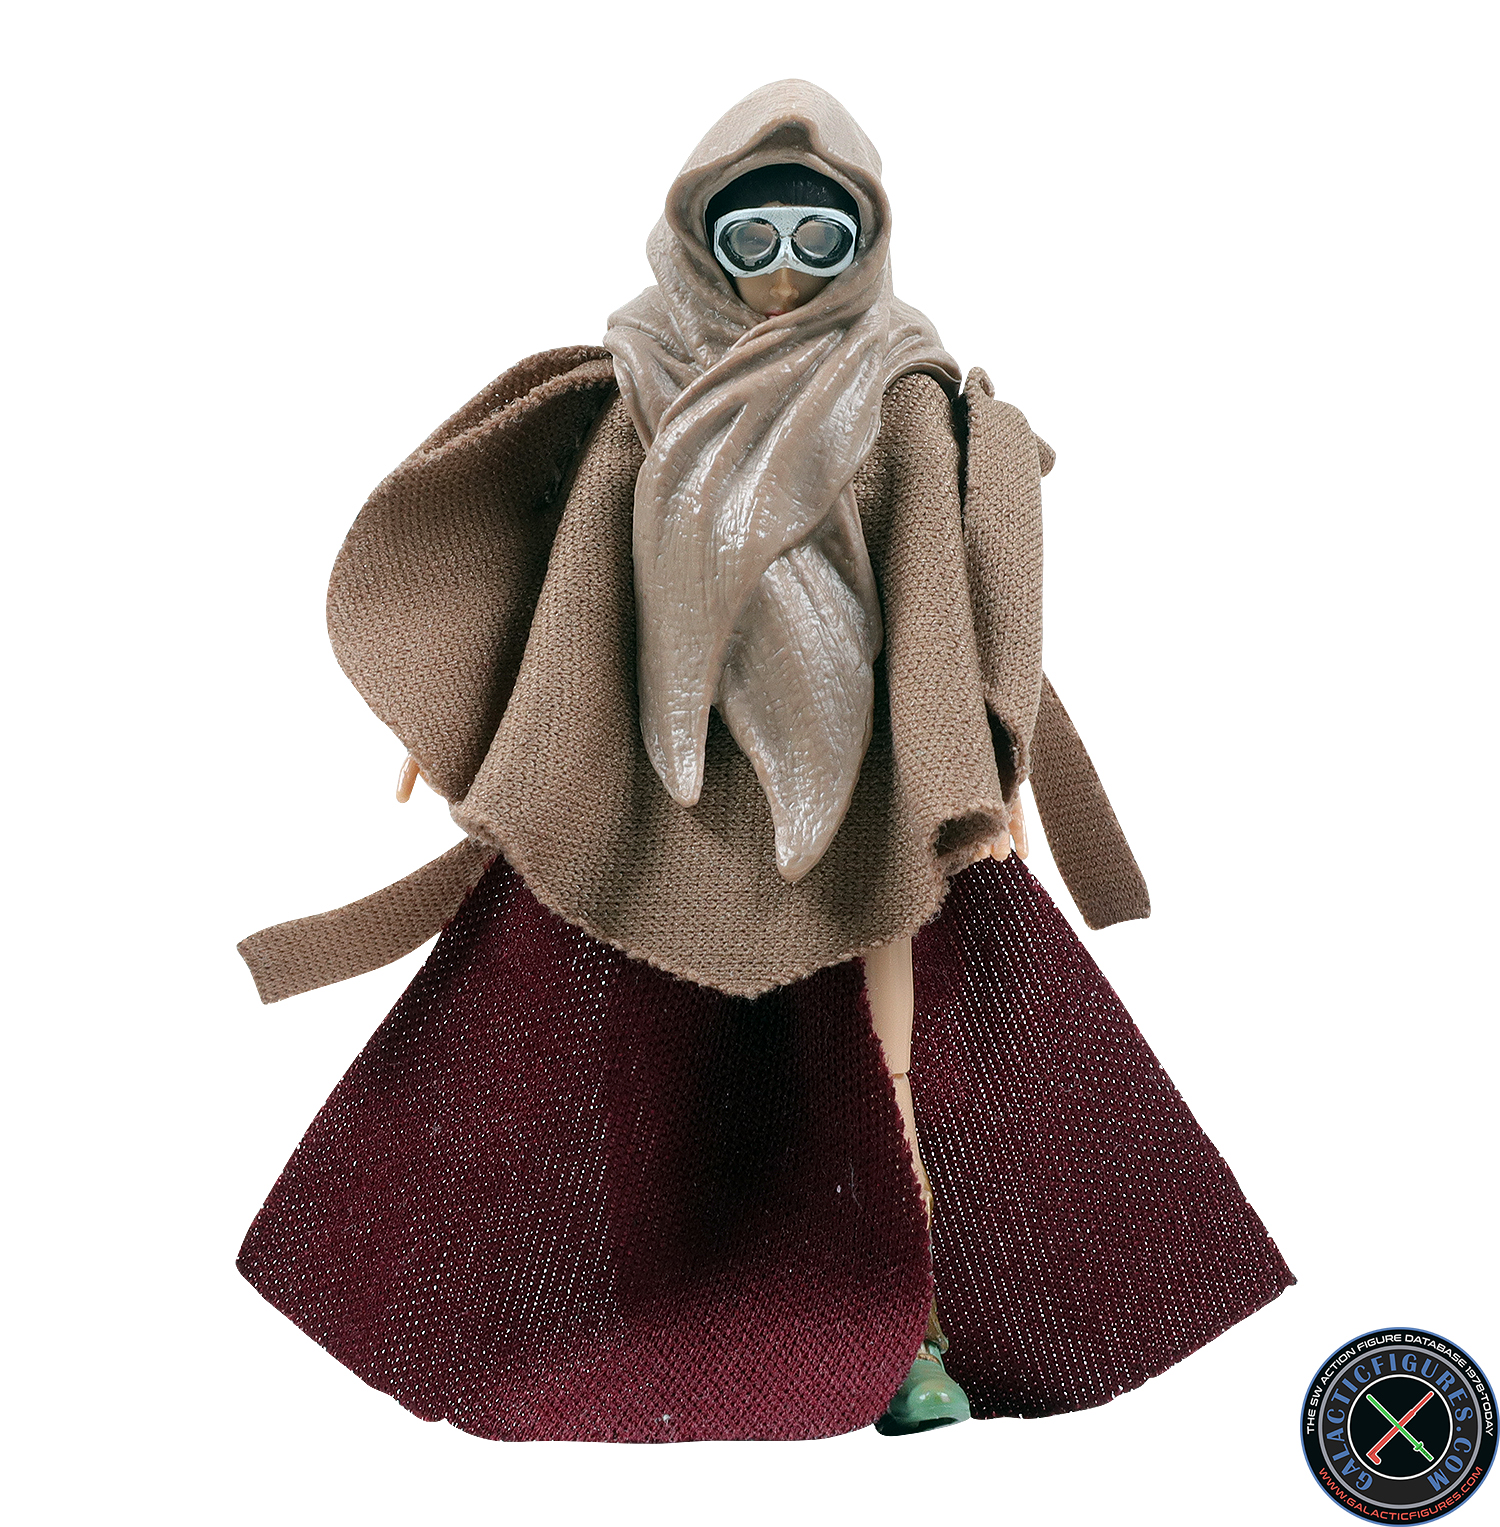 Princess Leia Organa Sandstorm Outfit